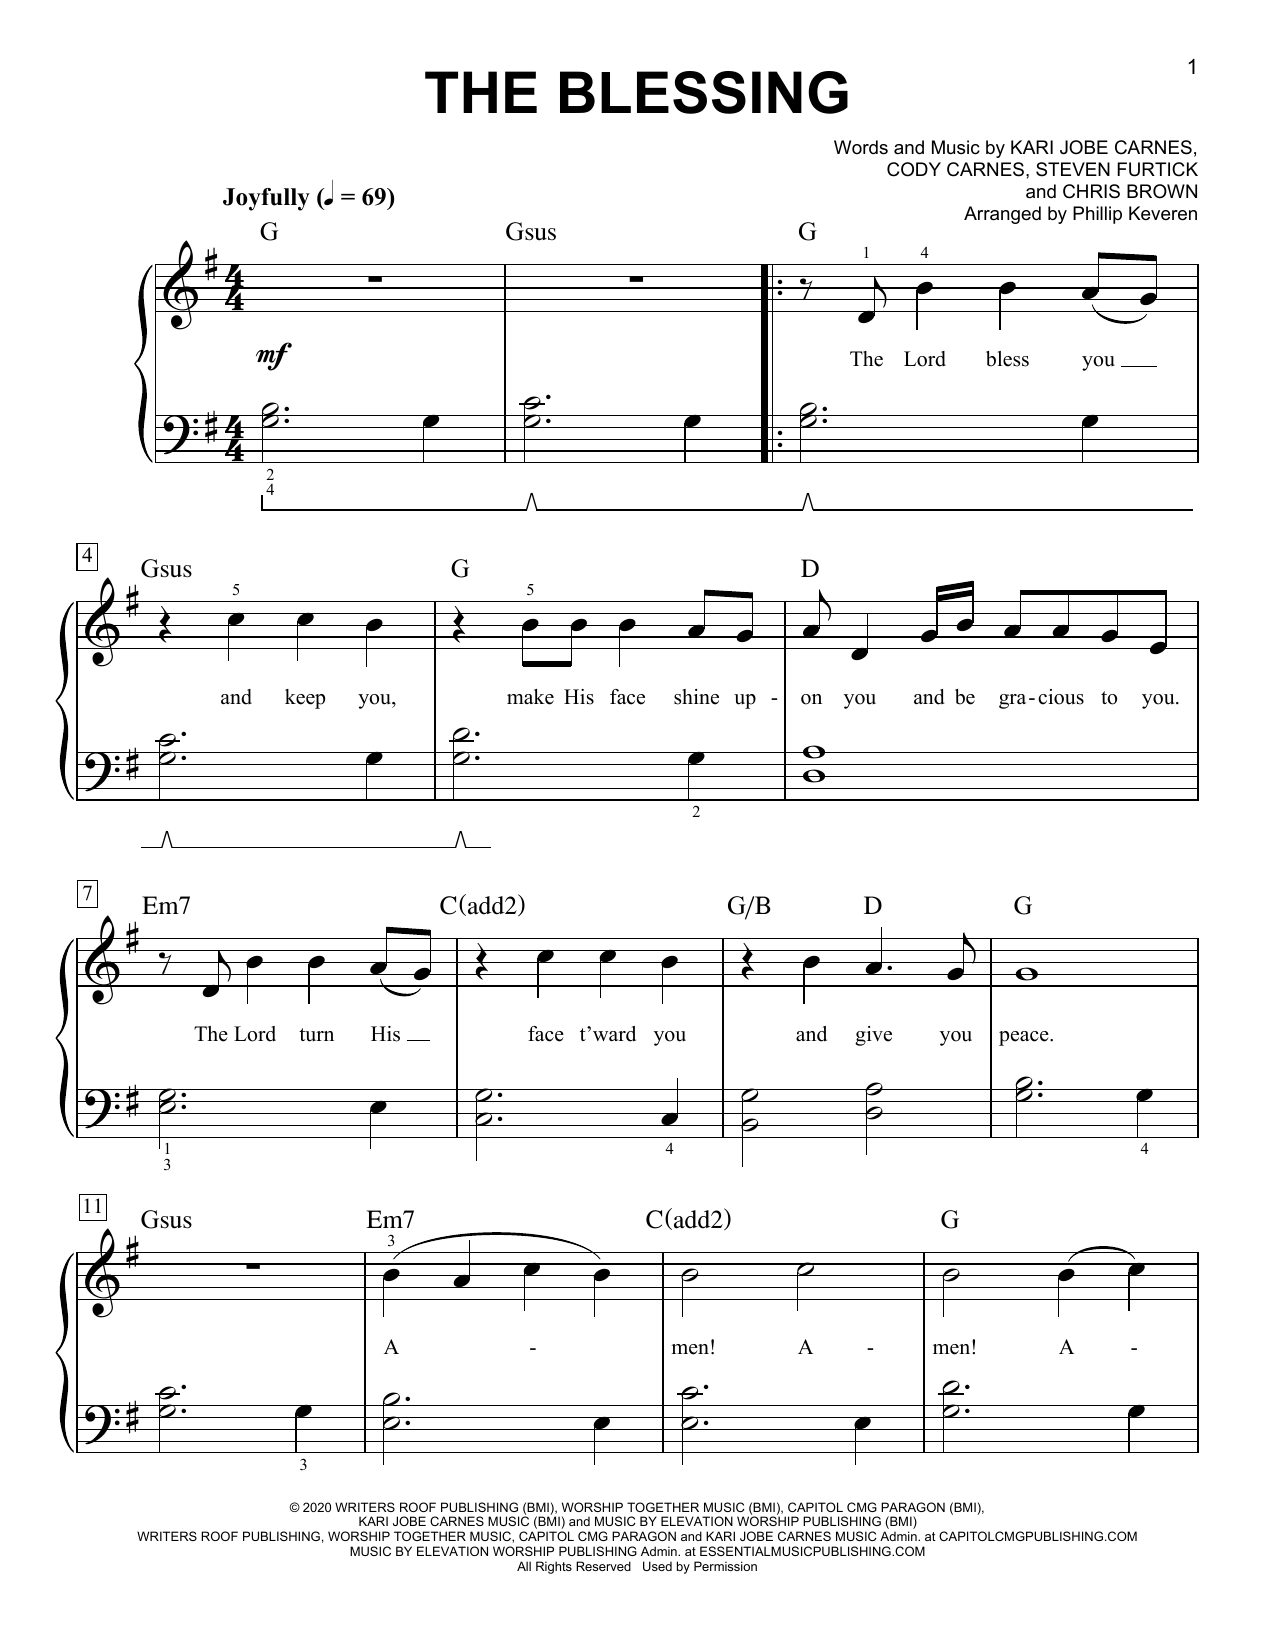 Kari Jobe & Cody Carnes The Blessing (arr. Phillip Keveren) sheet music notes and chords. Download Printable PDF.